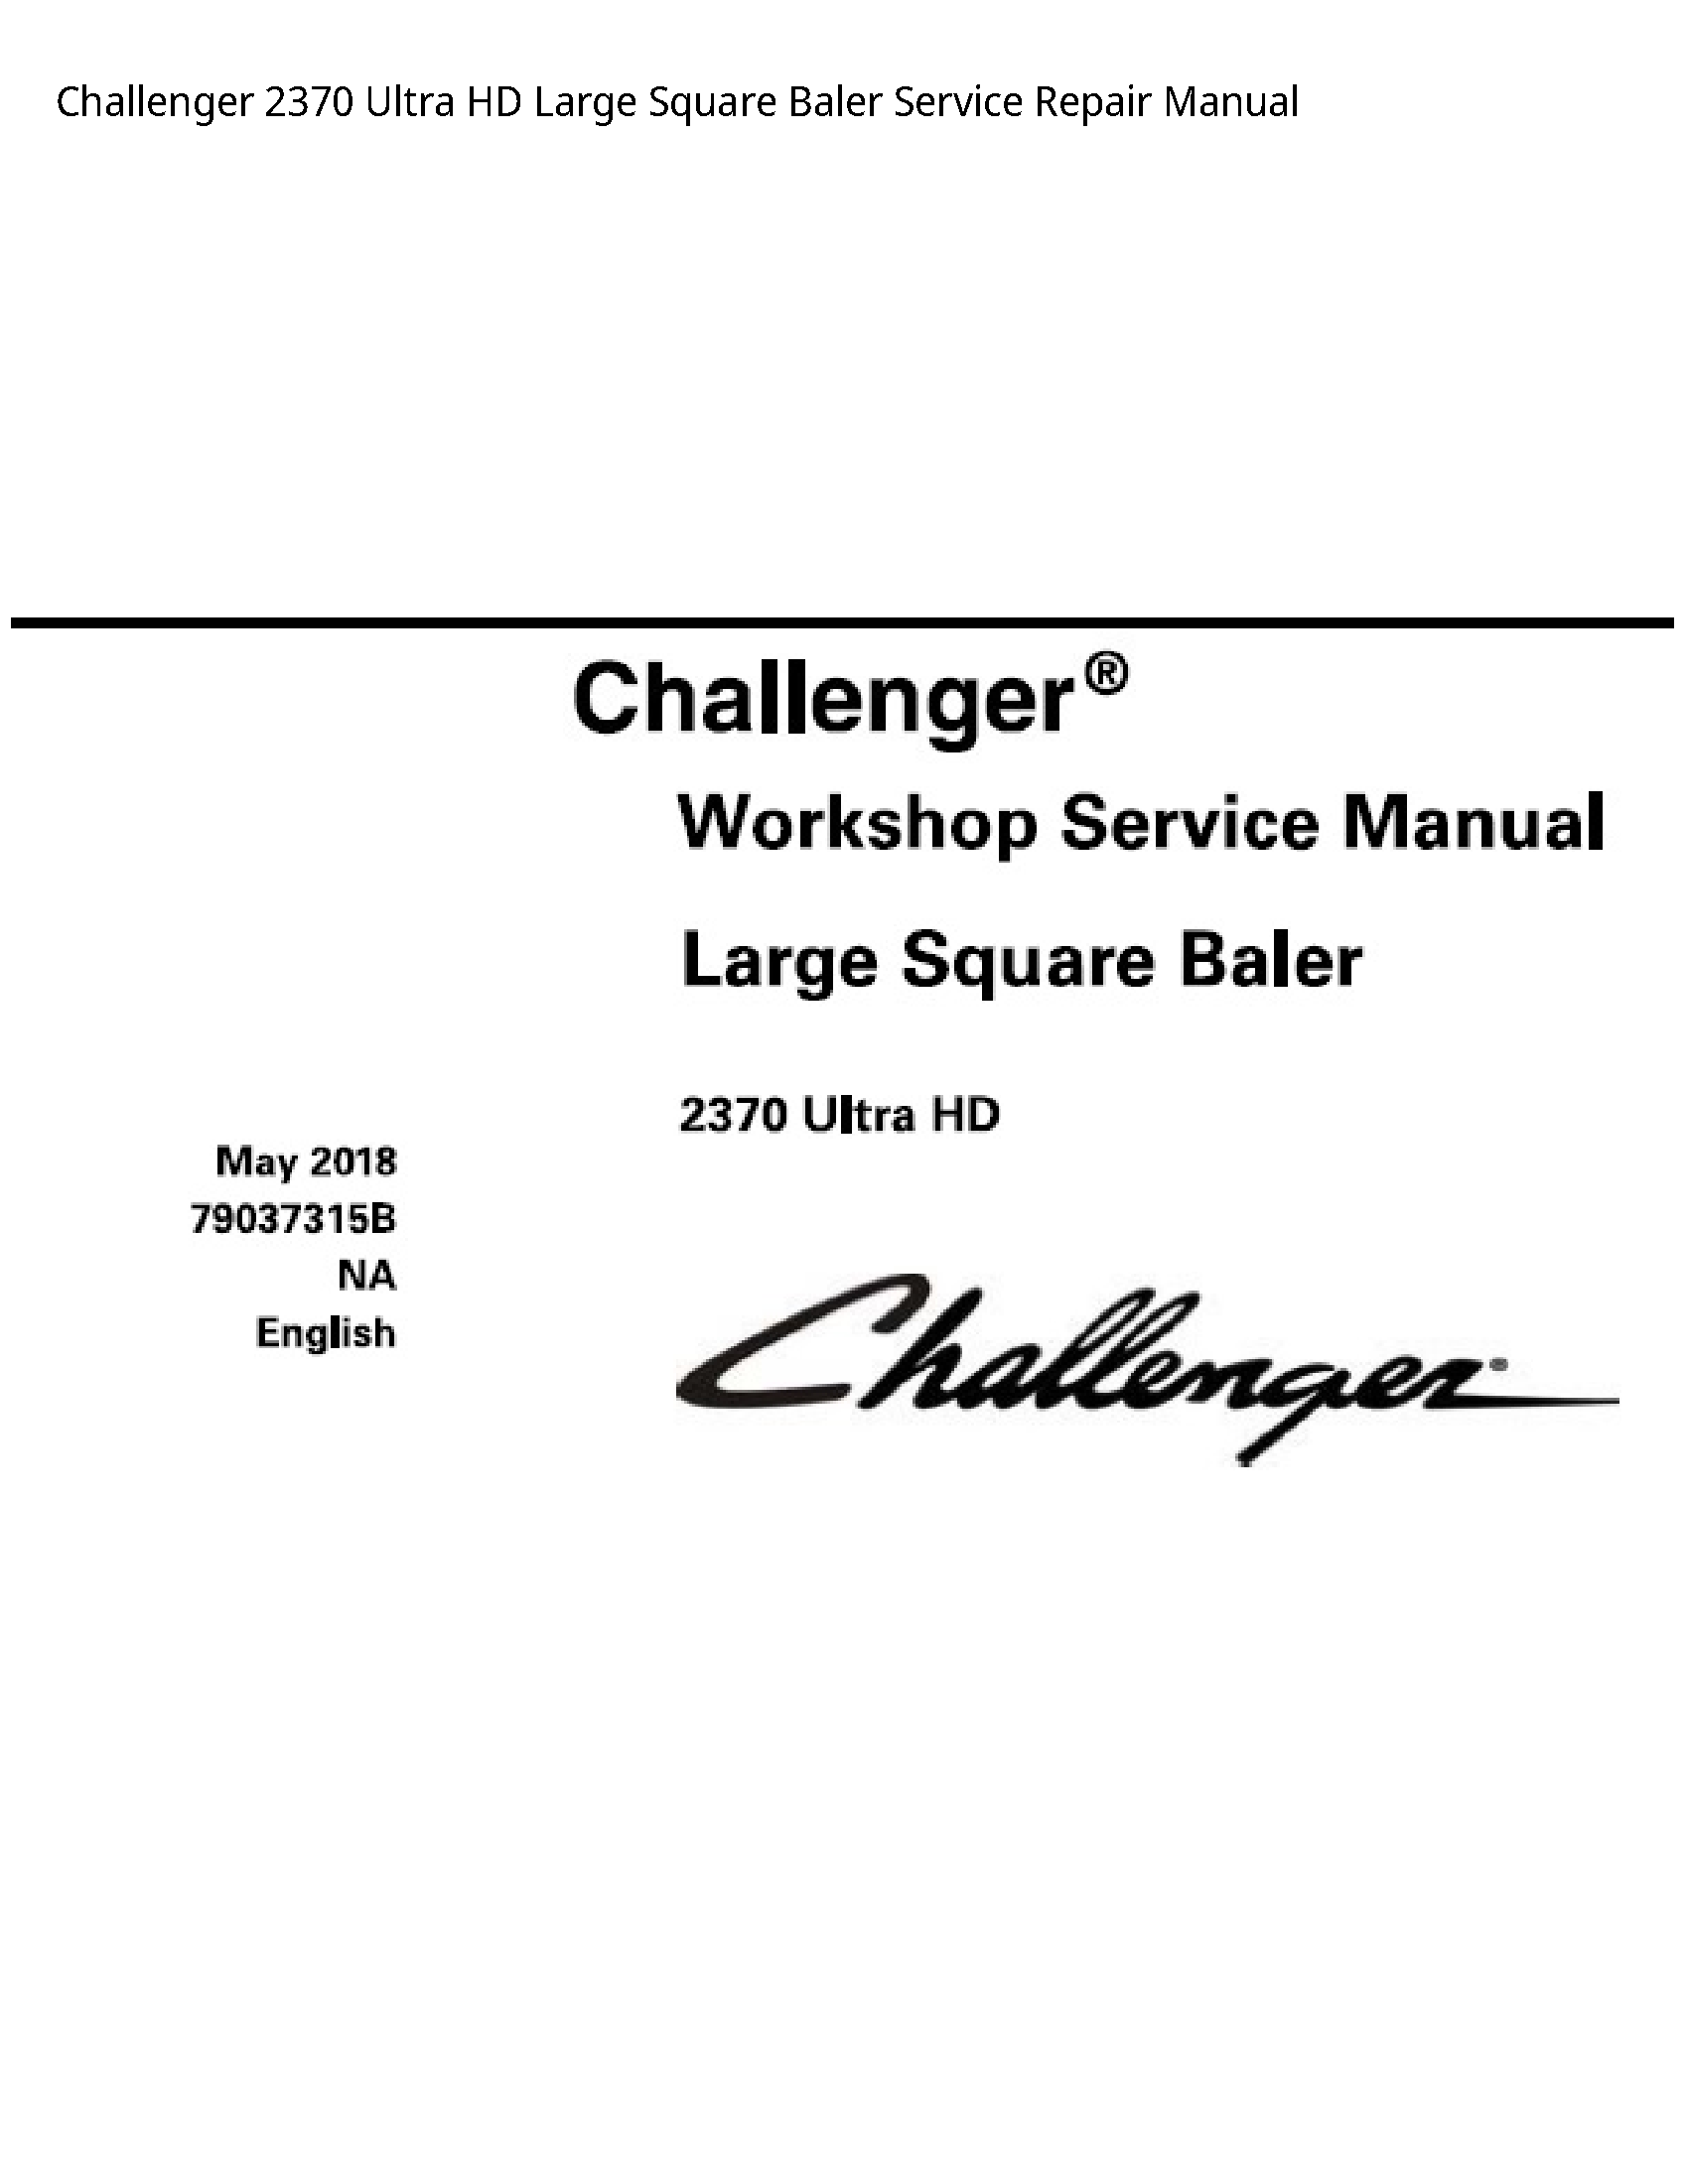 Challenger 2370 Ultra HD Large Square Baler manual